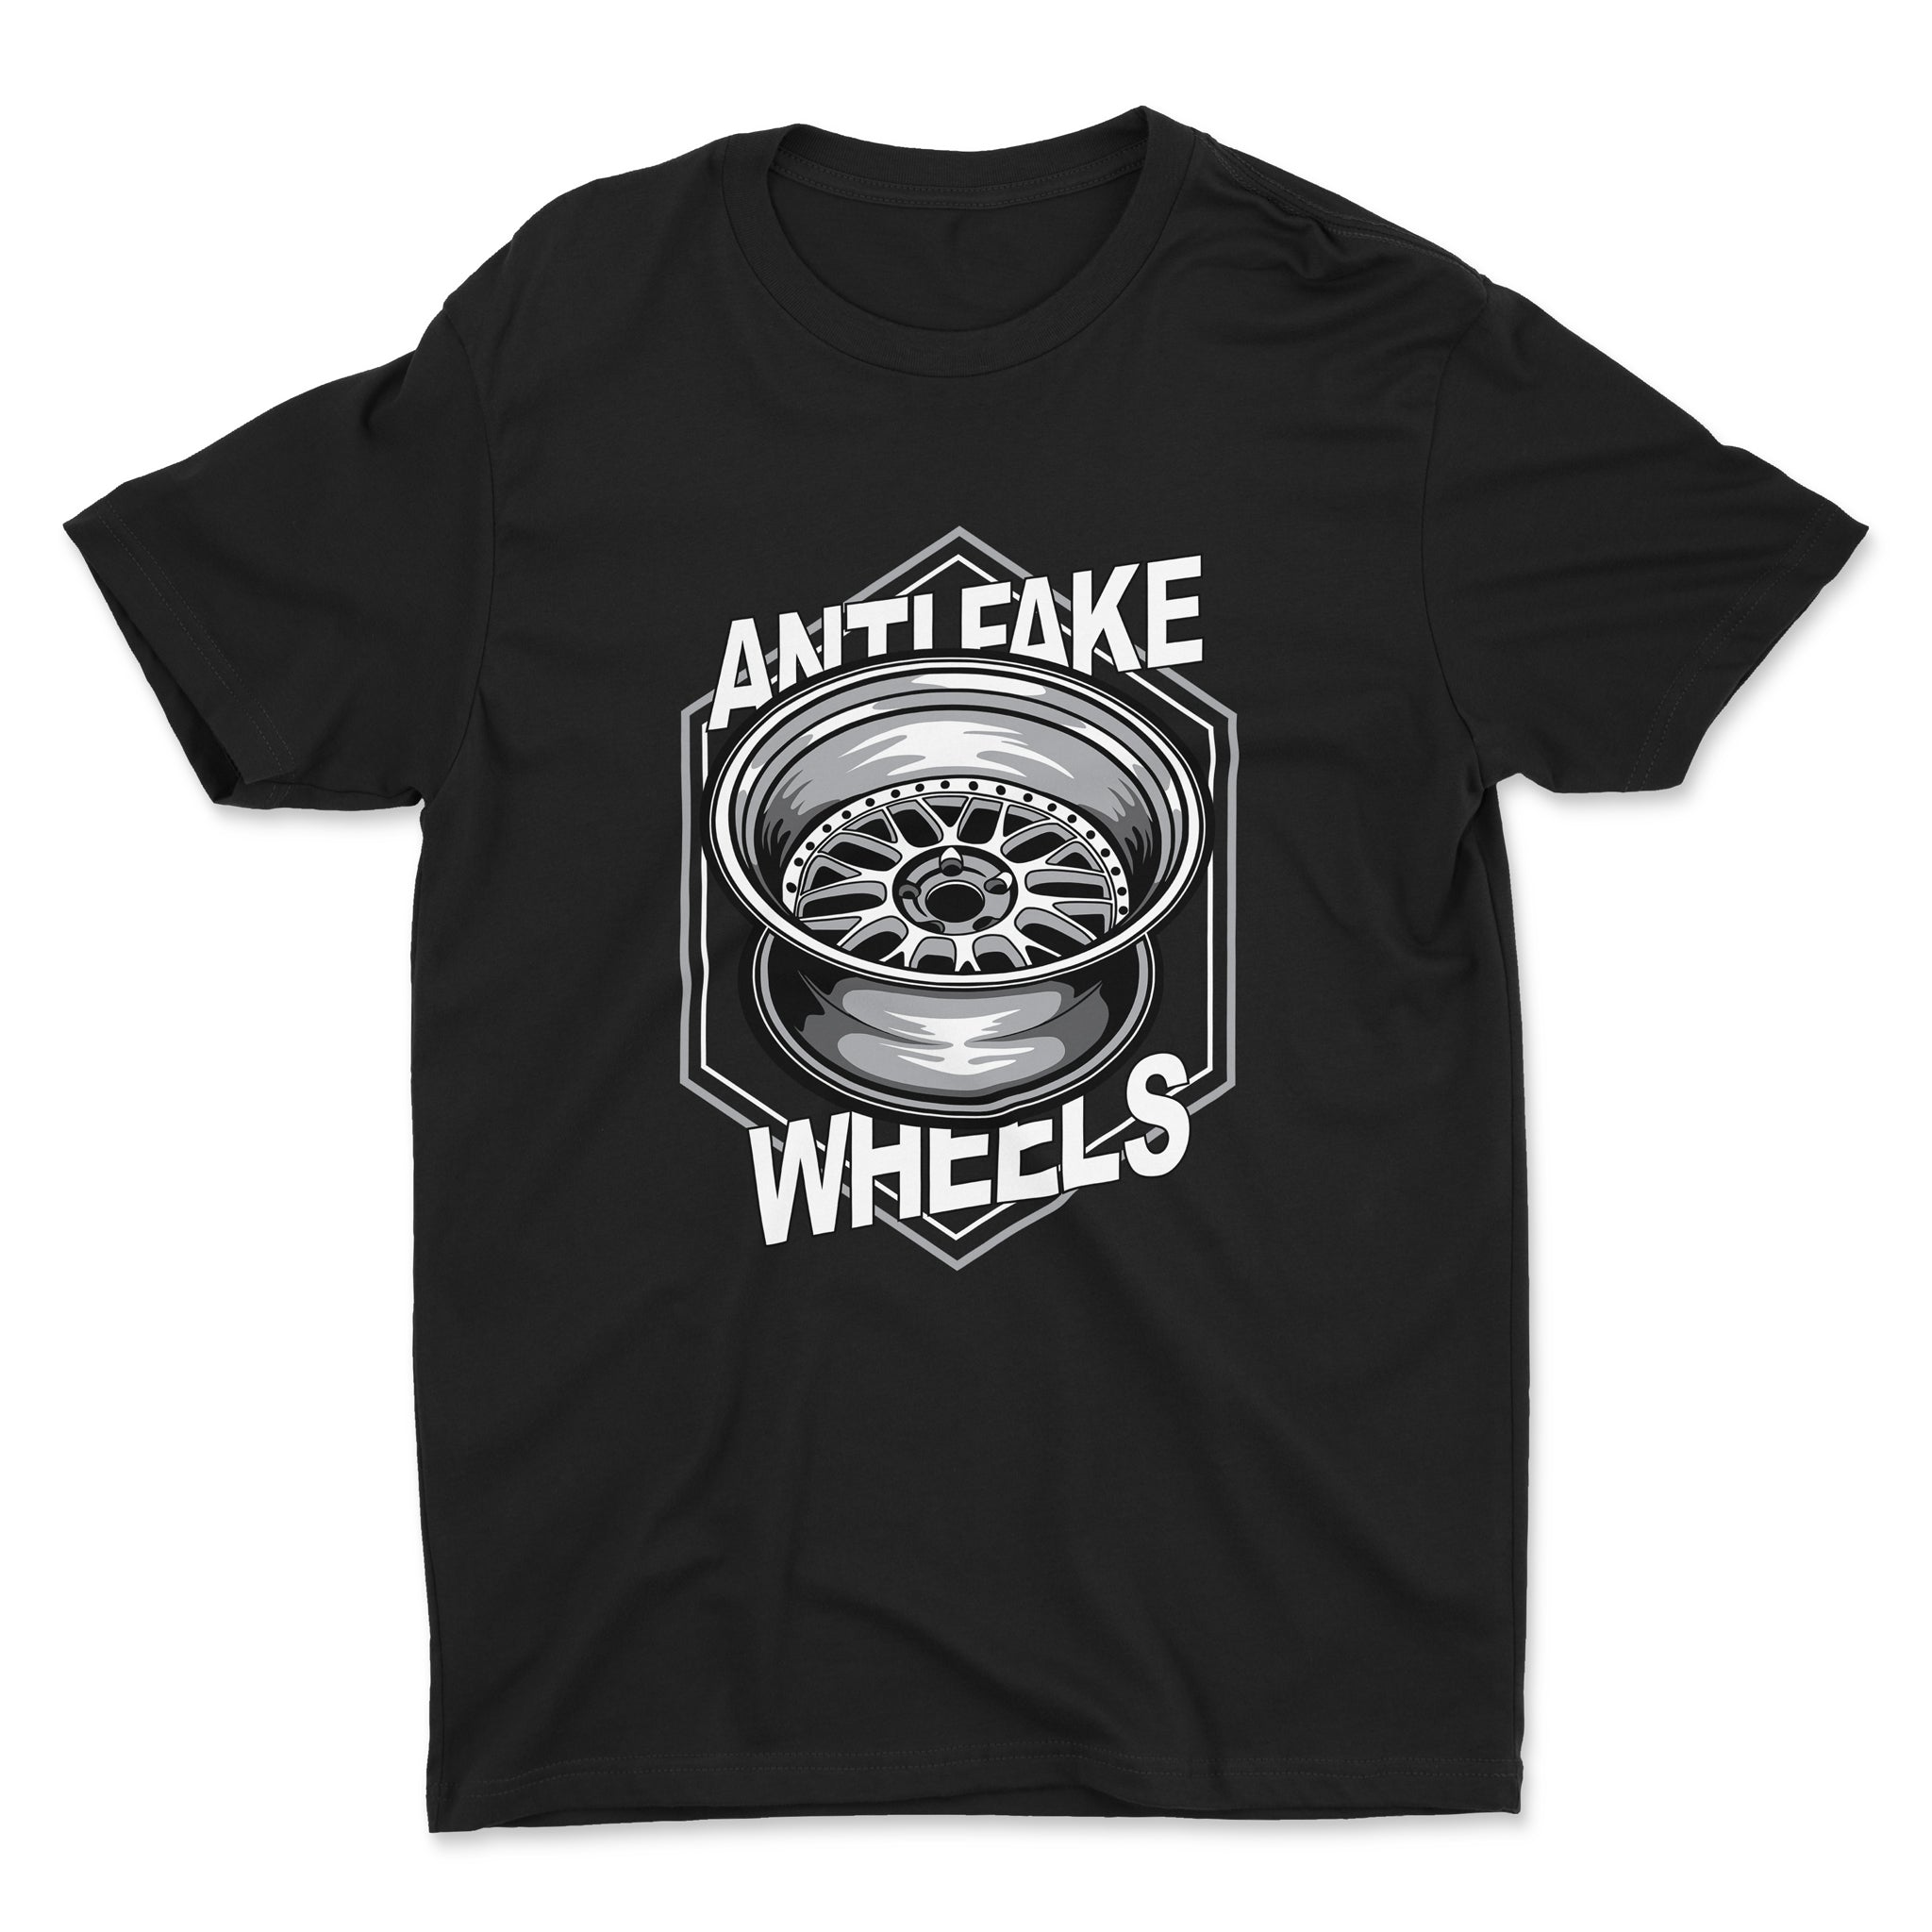 Anti Fake Wheels - VSXX - Car T-Shirt - Black